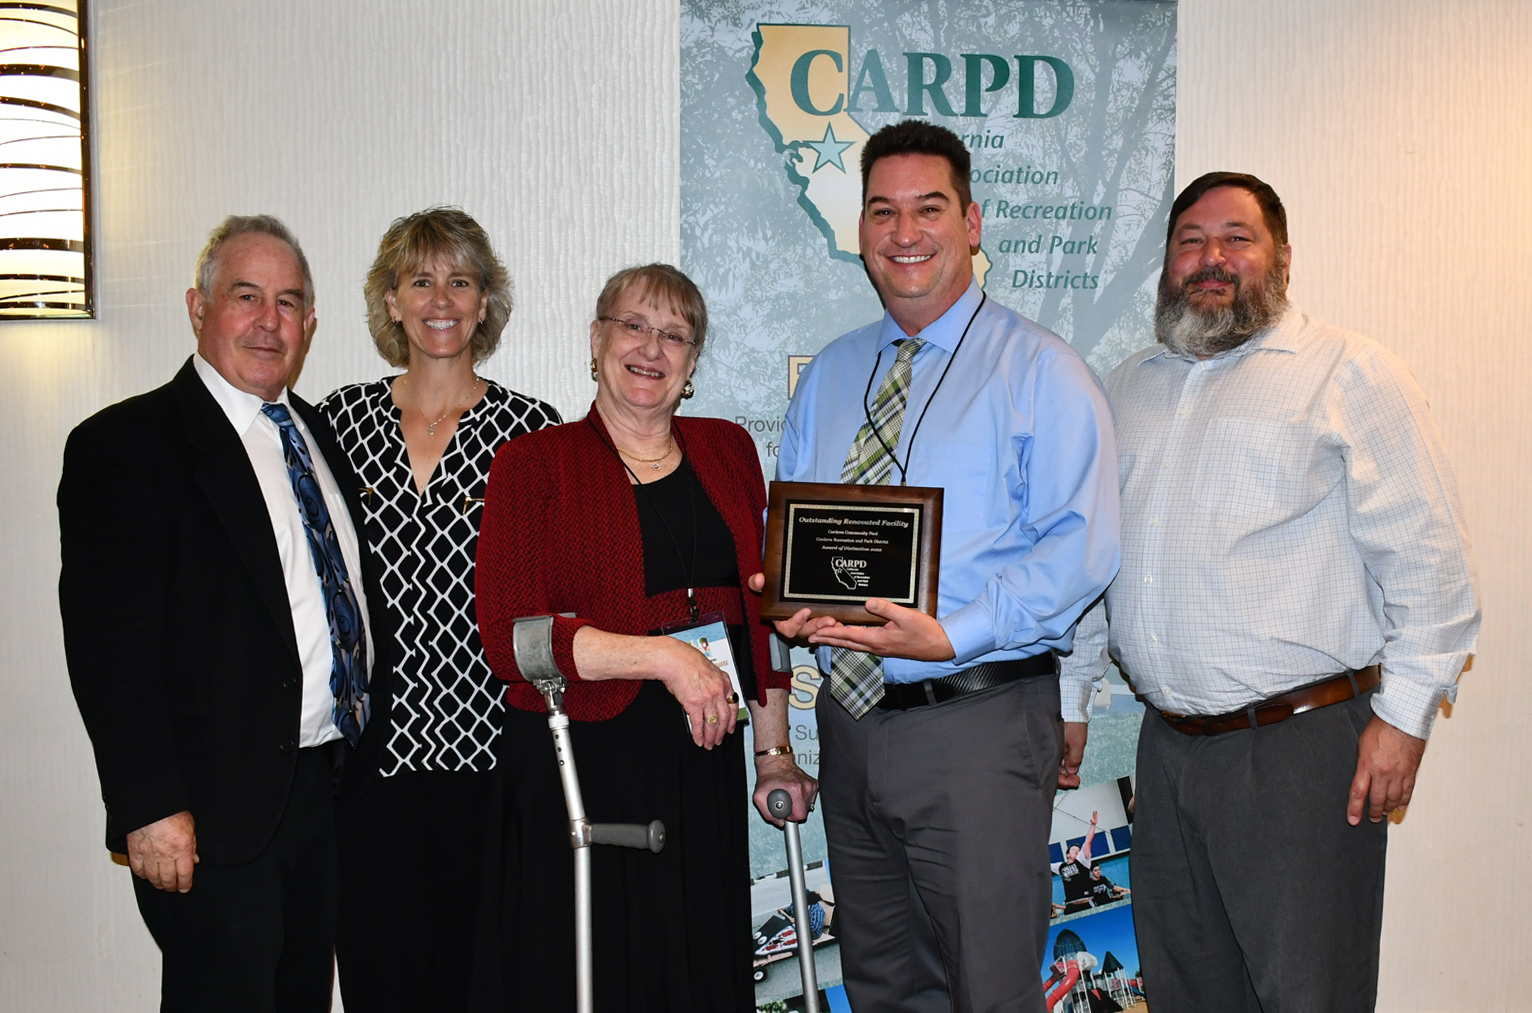 CRPD Award ceremony